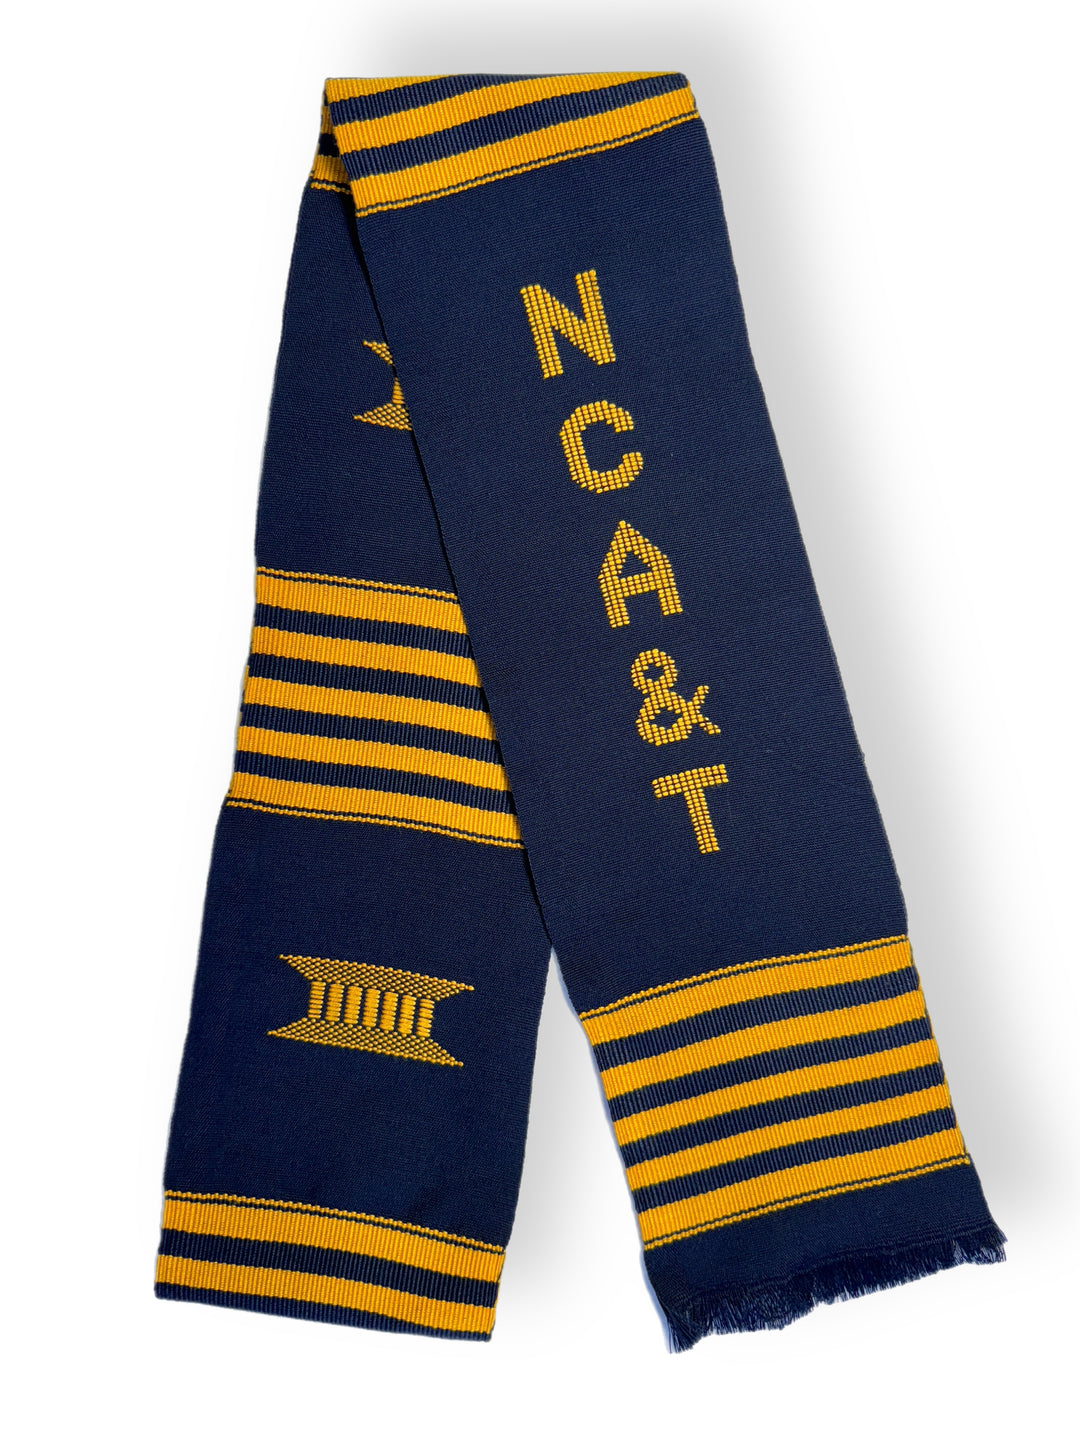 North Carolina A&T (NCA&T) State University Kente Graduation Stole